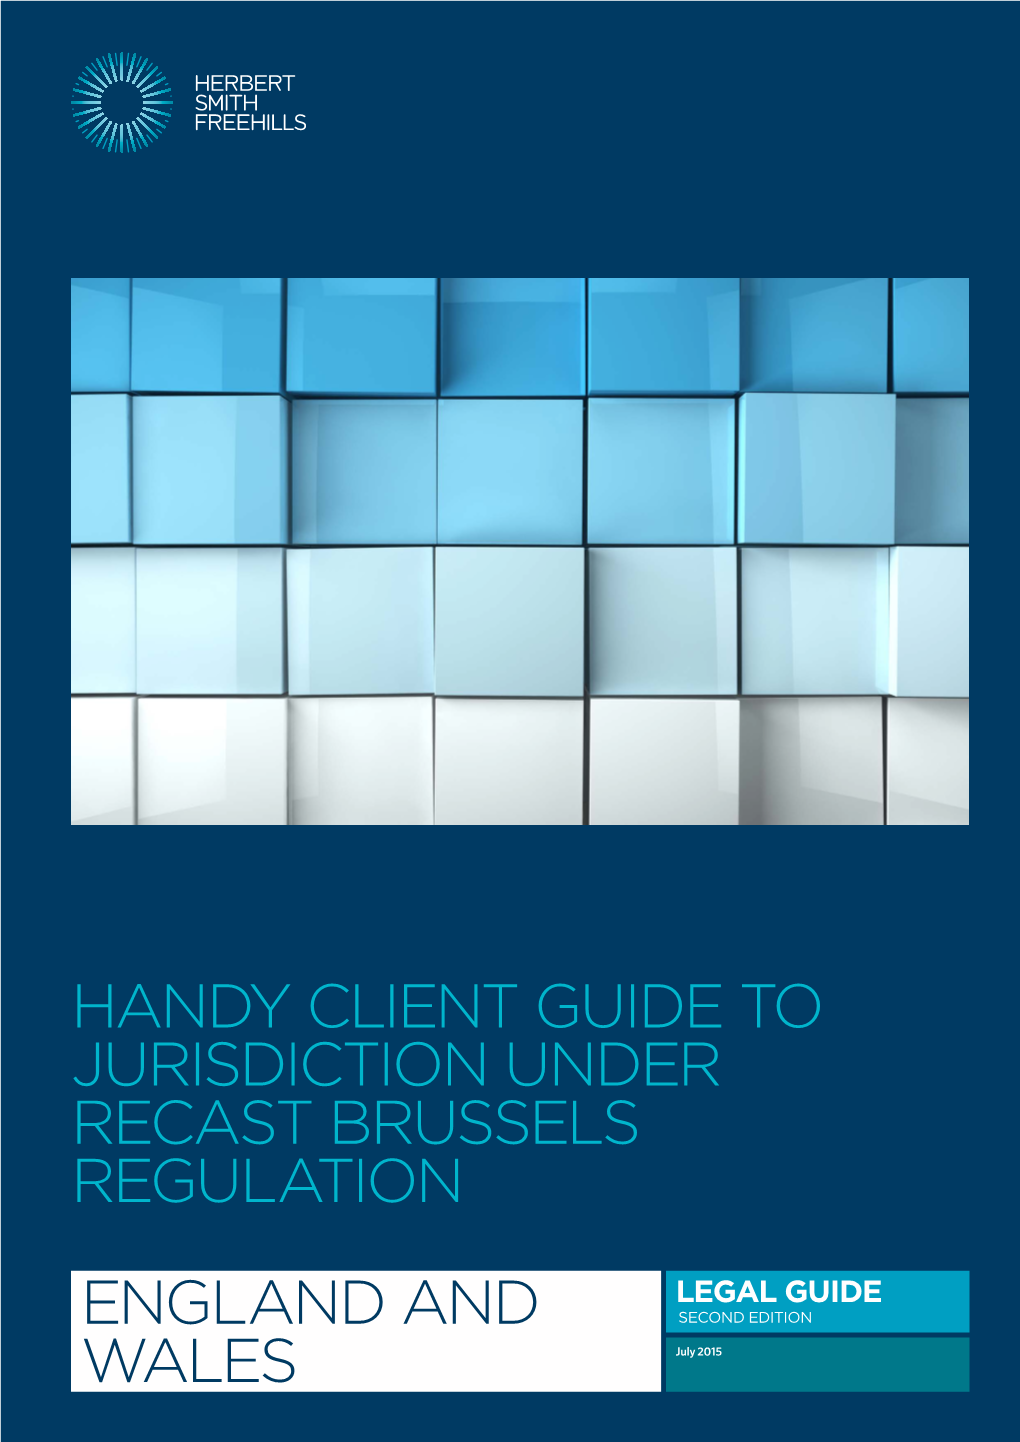 Handy Client Guide to Jurisdiction Under Recast Brussels Regulation, July 2015